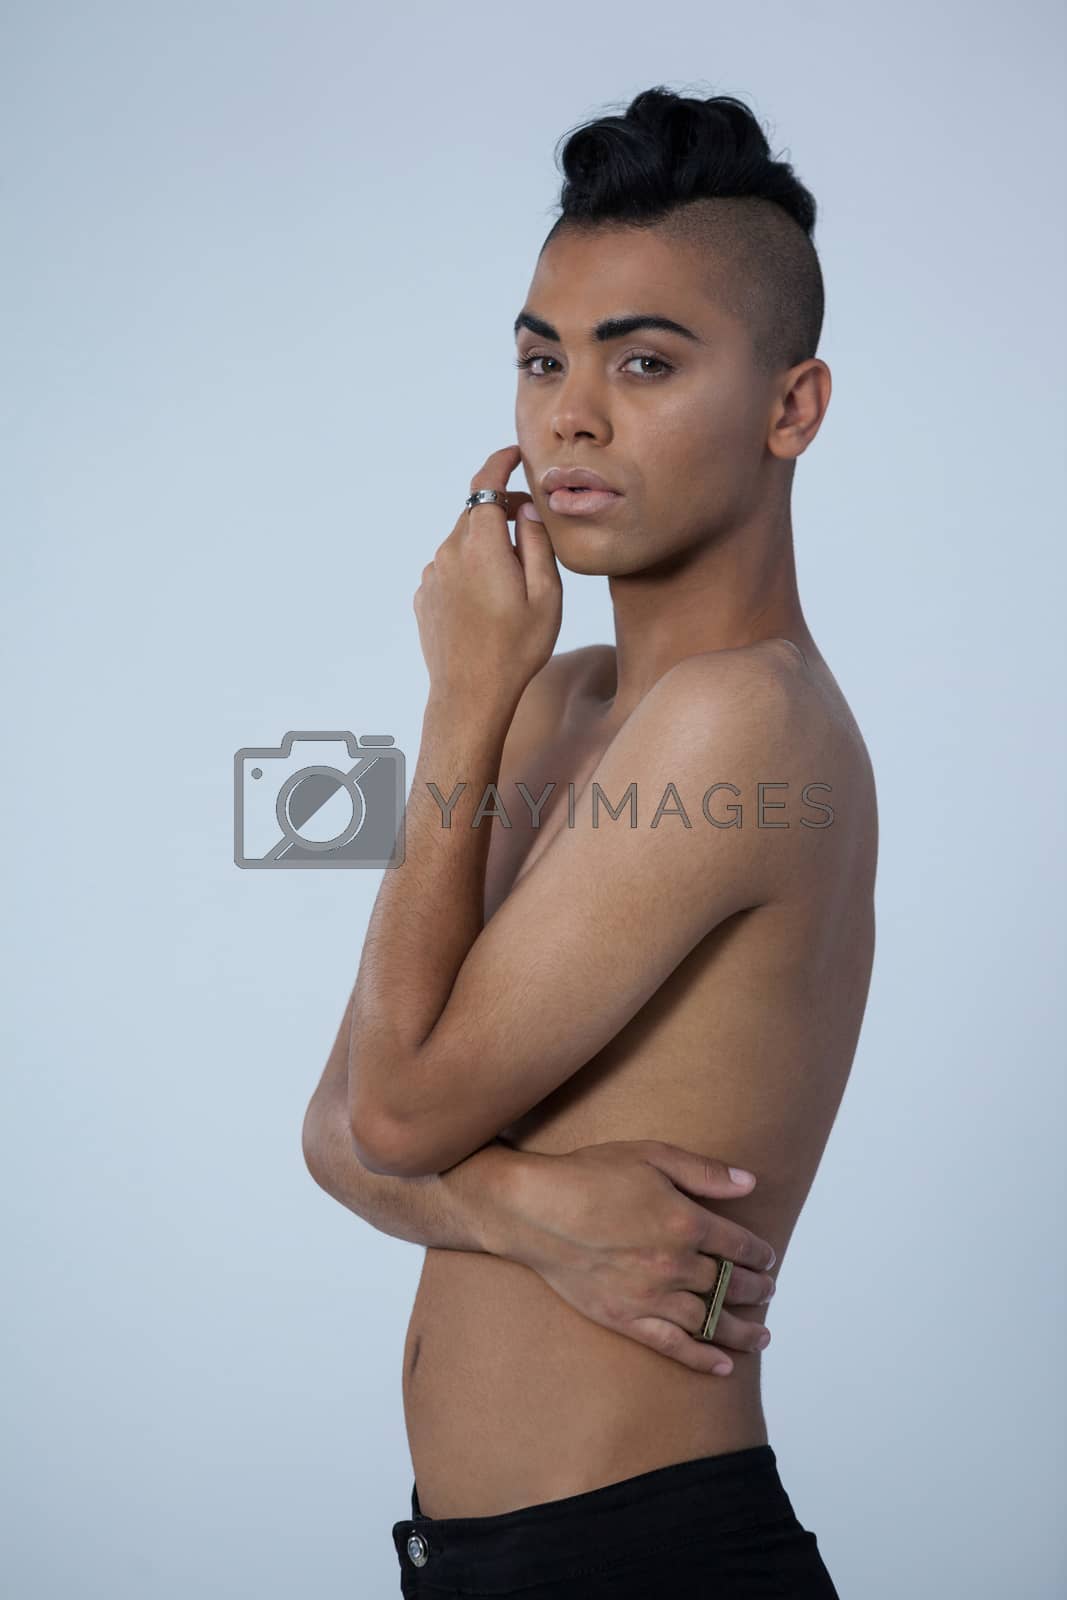 Royalty free image of Portrait of sensuous transgender woman by Wavebreakmedia